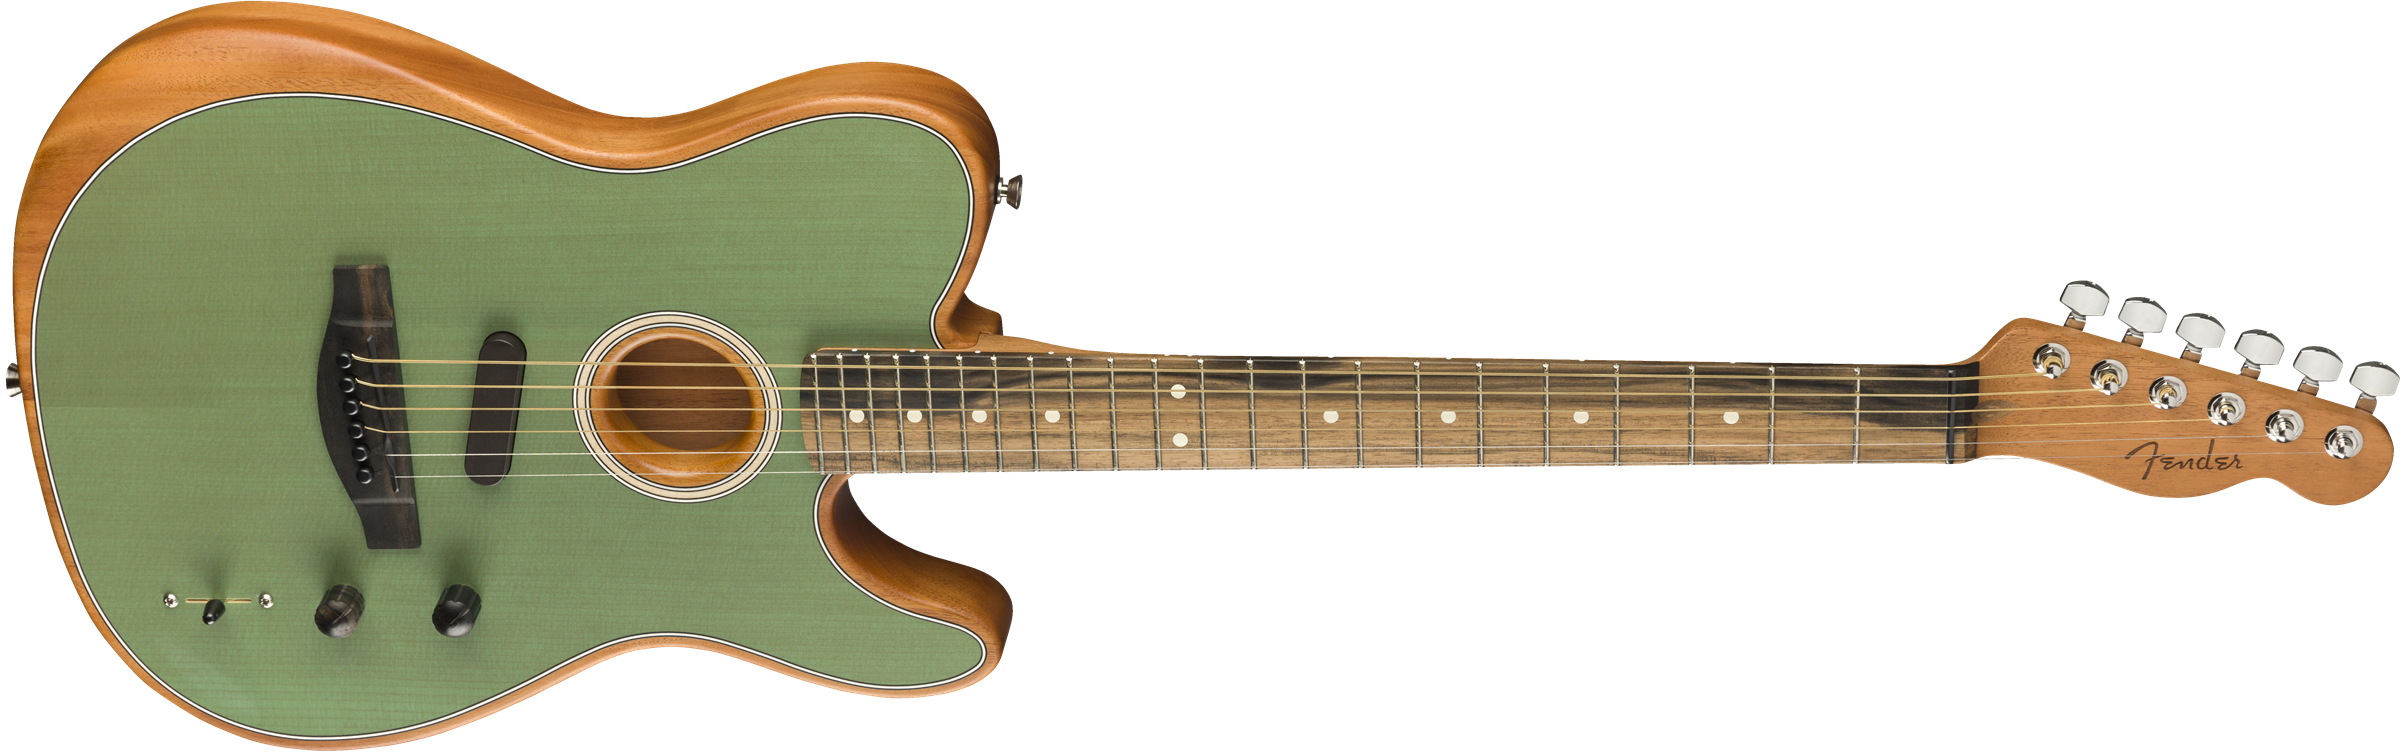 Fender Tele American Acoustasonic Usa Eb - Surf Green - Westerngitarre & electro - Variation 2